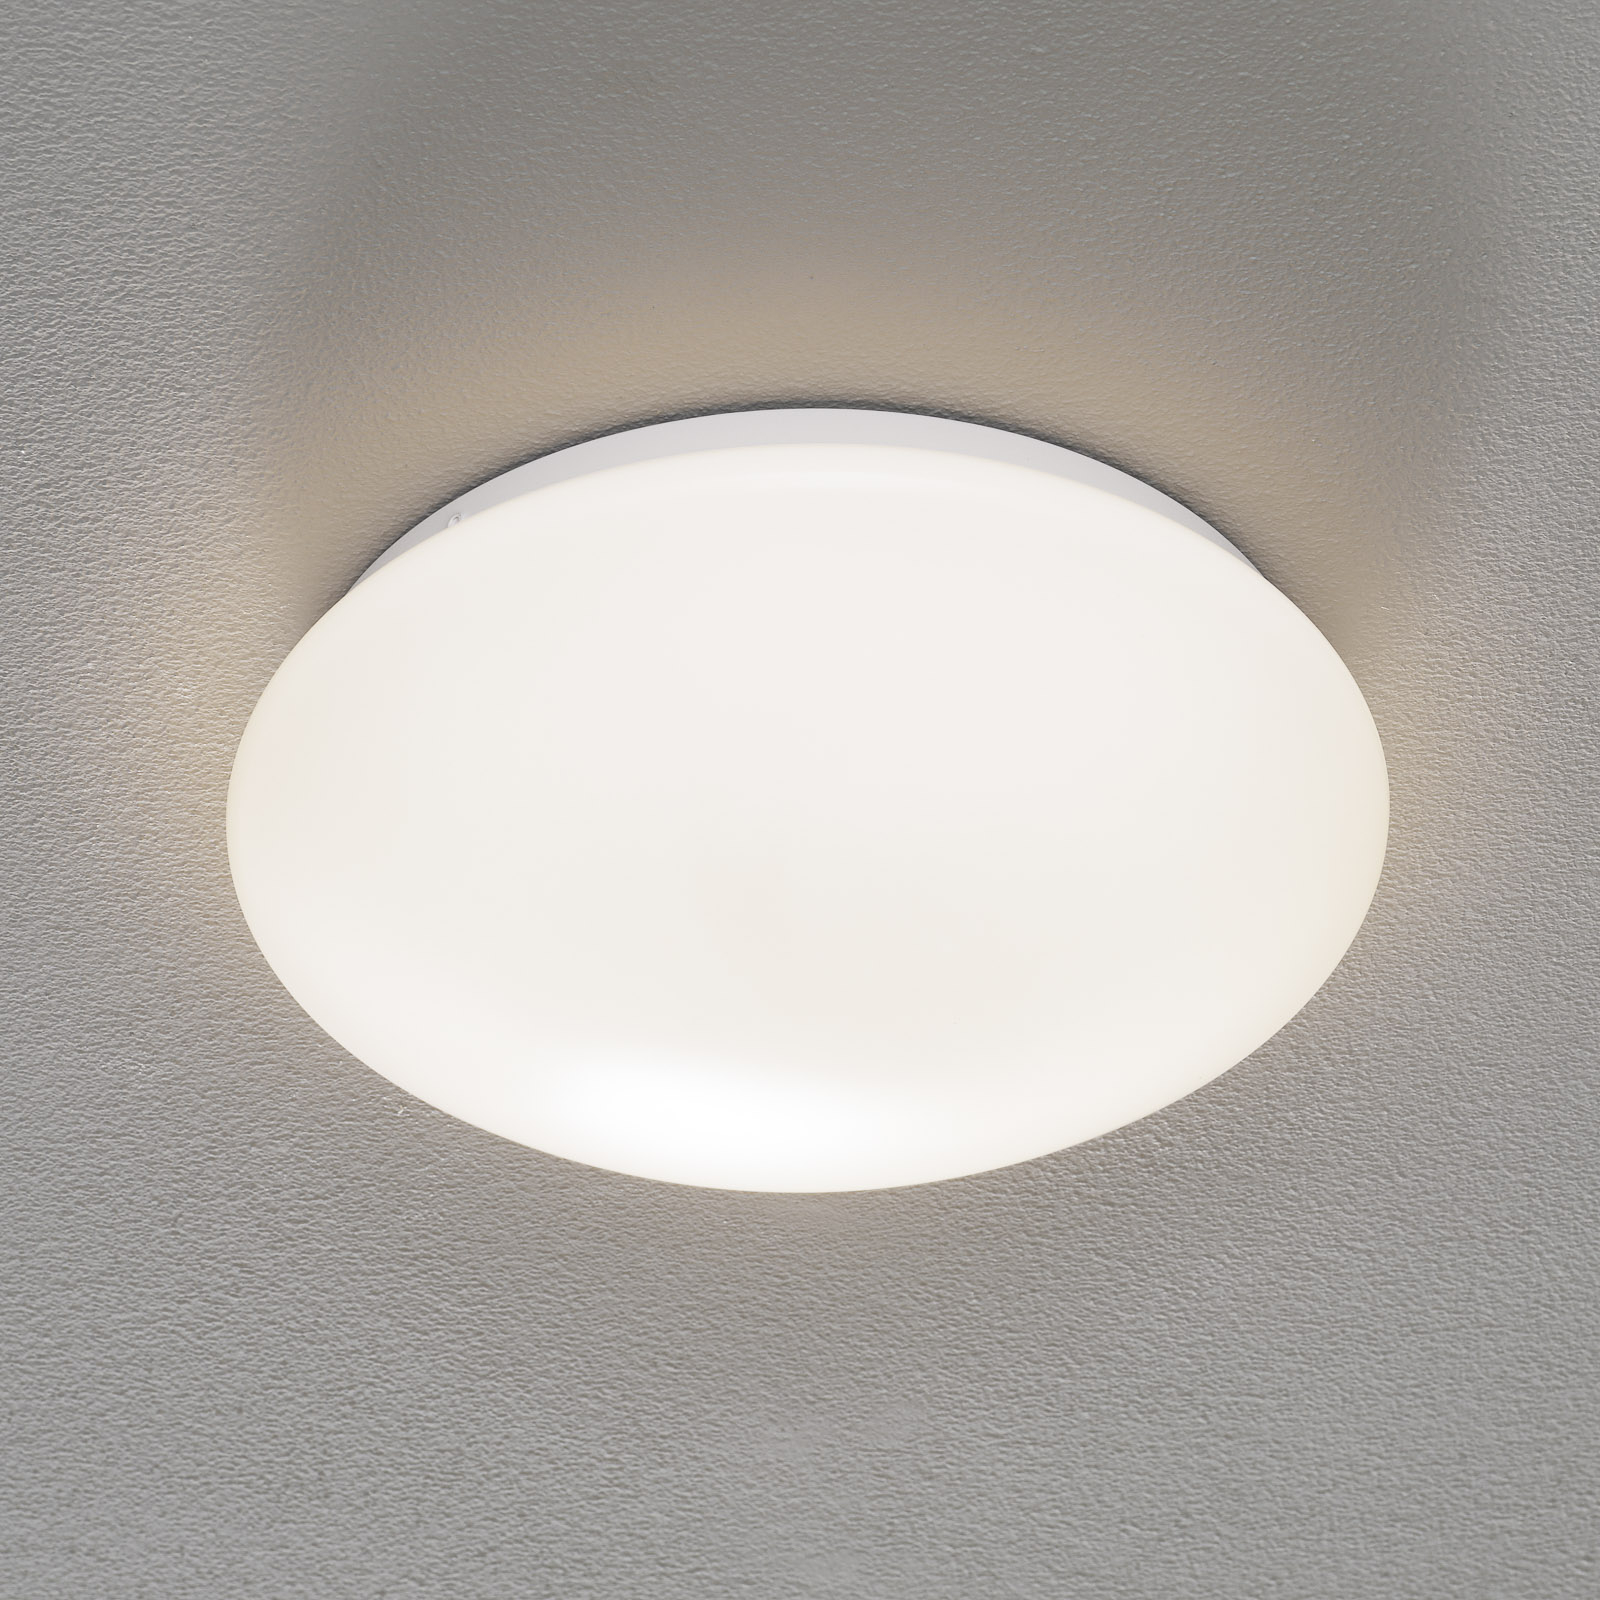 Verwaarlozing Verloren Gedwongen EGLO connect Giron-C LED ceiling light white | Lights.co.uk